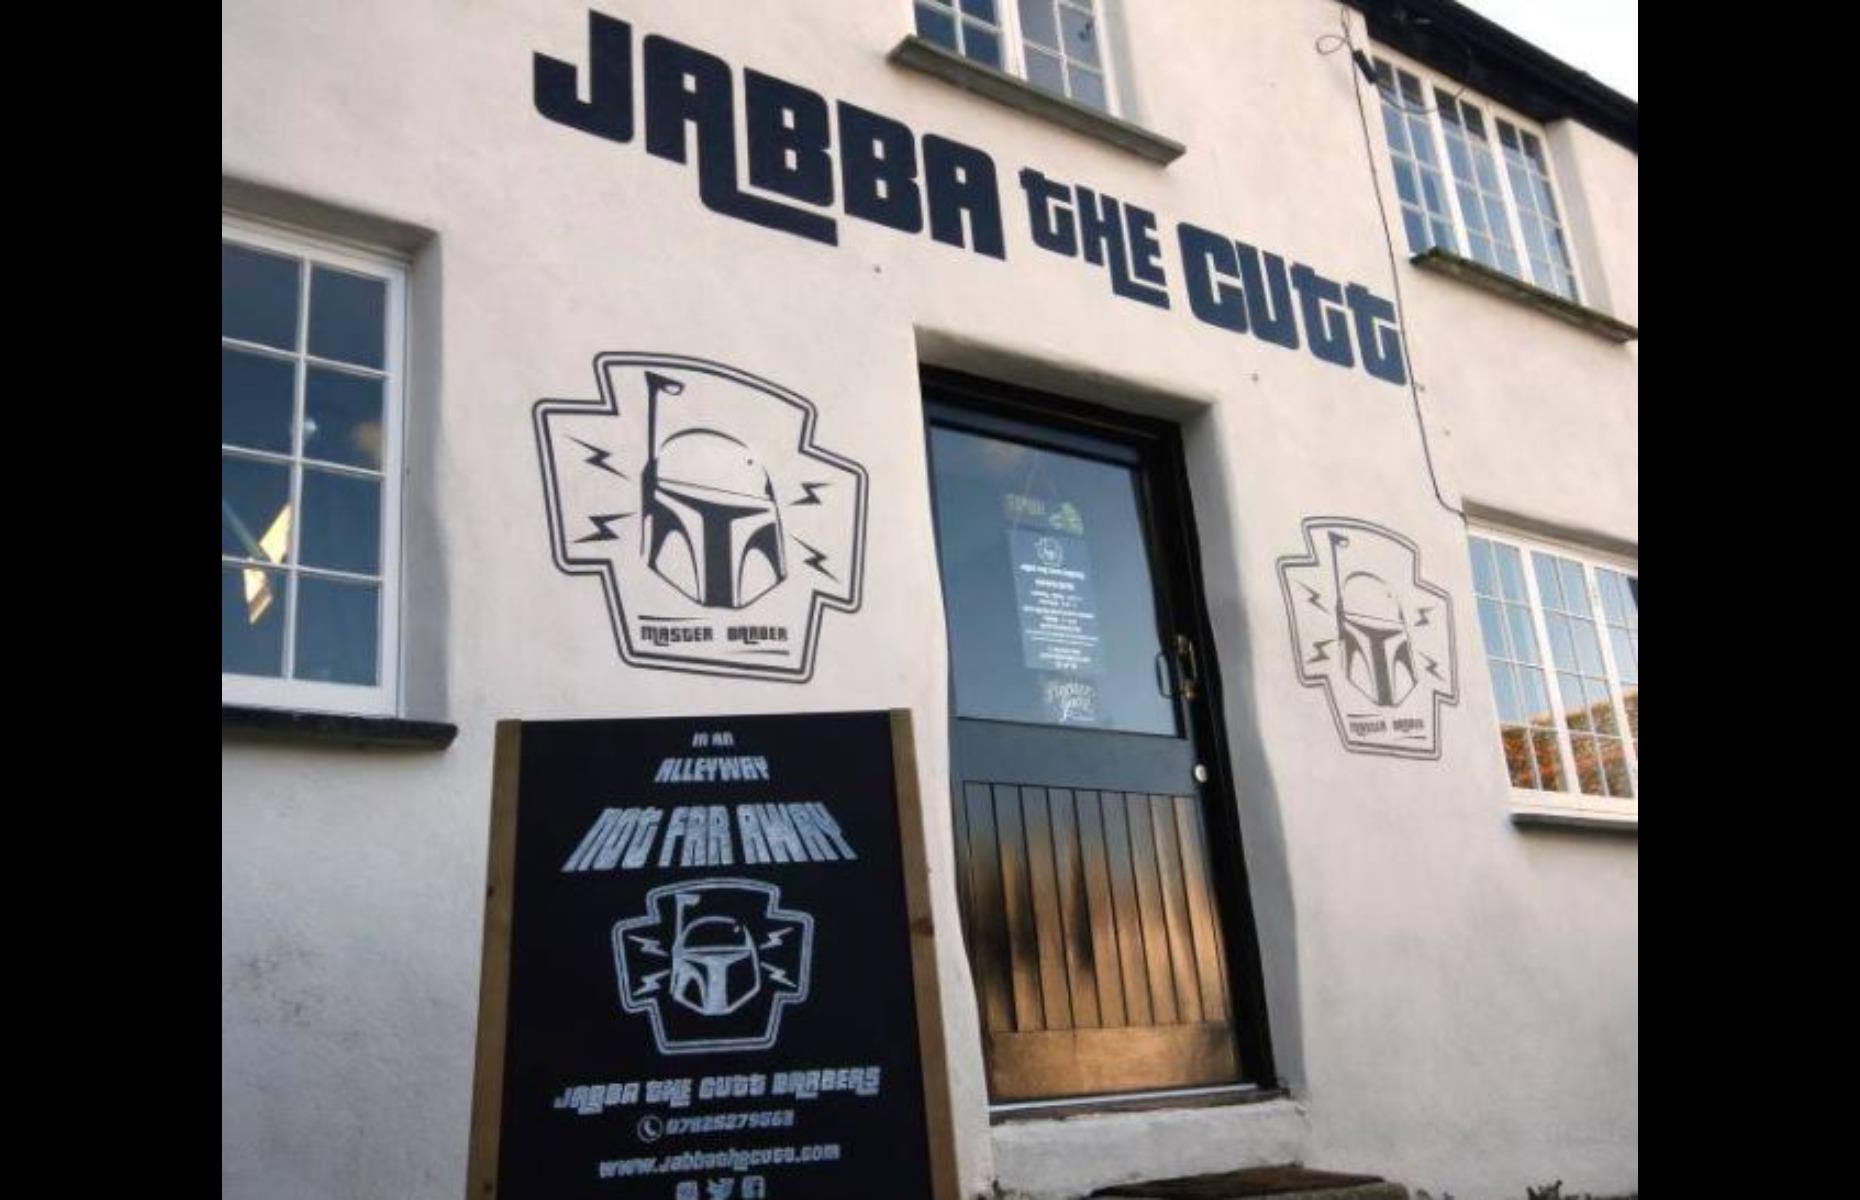 Jabba the Cutt, UK